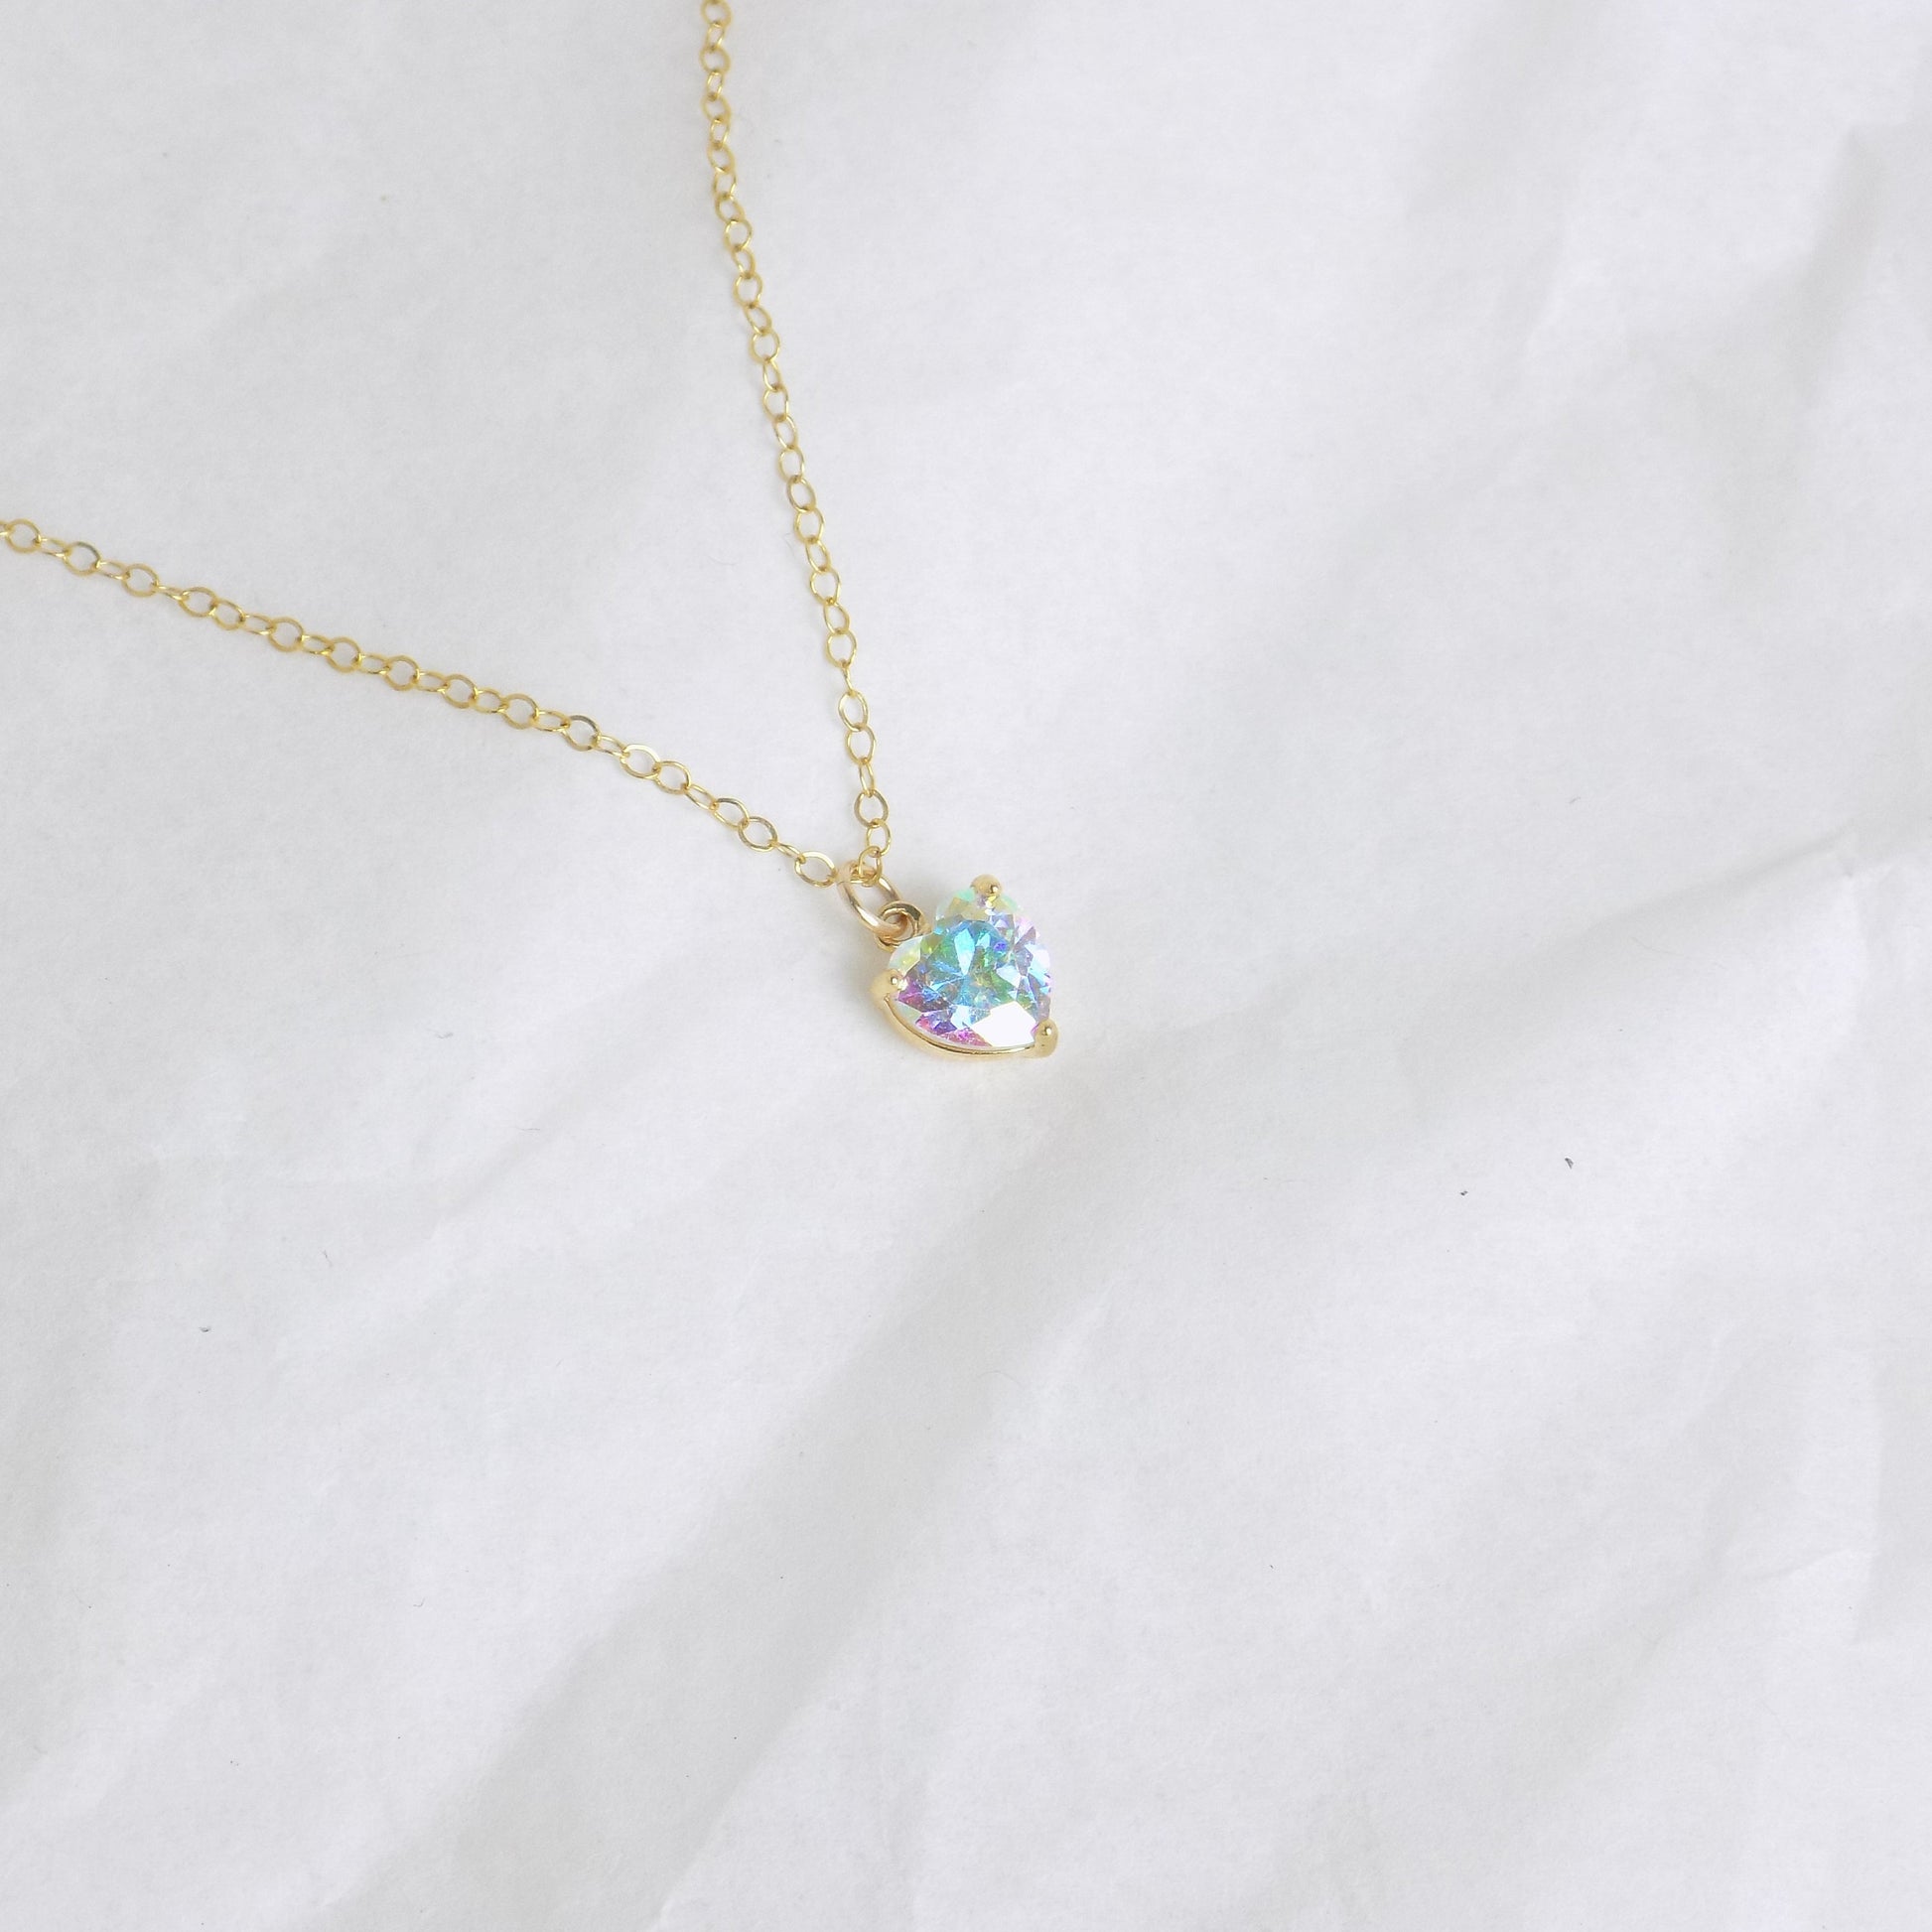 Tiny Heart Necklace, Purple Aura Quartz Heart Charm Necklace Layering Gold, Best Friend Gift, M6-40